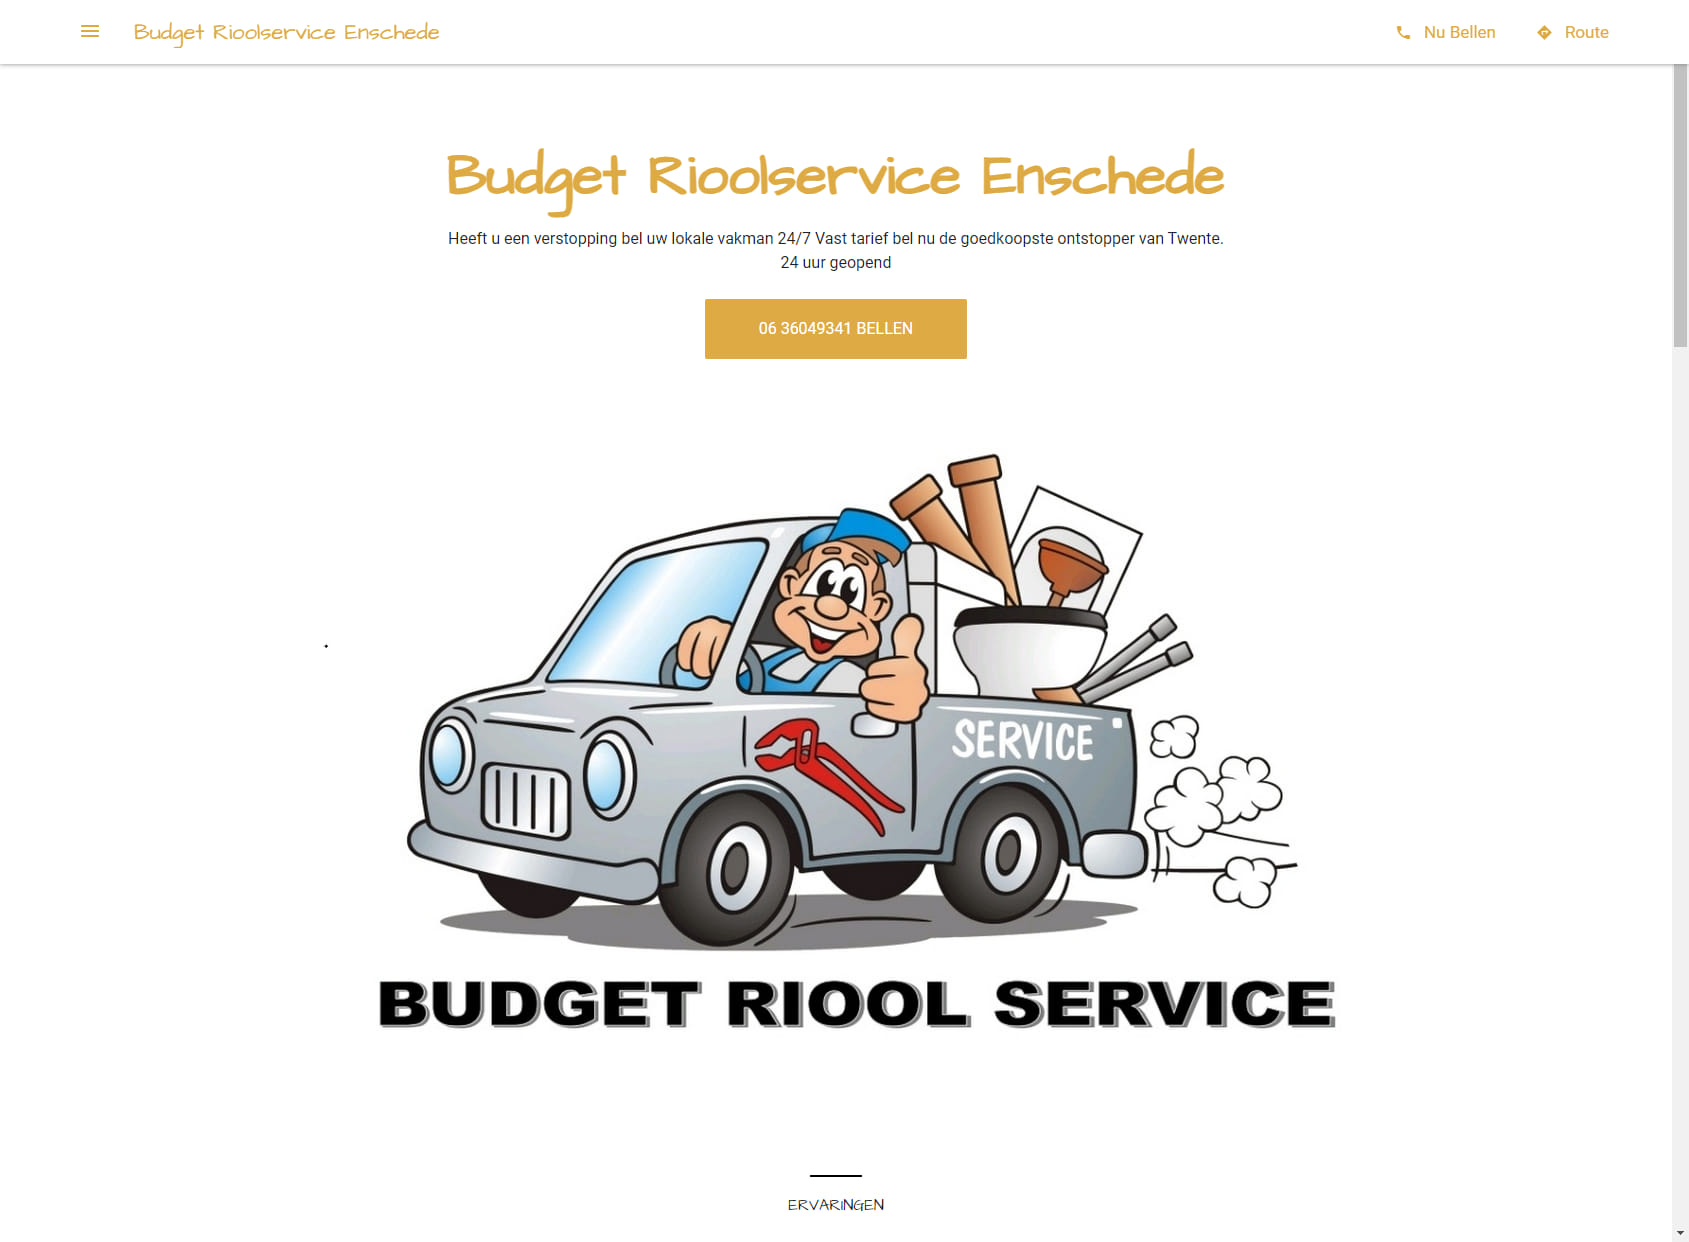 Budget Rioolservice Enschede